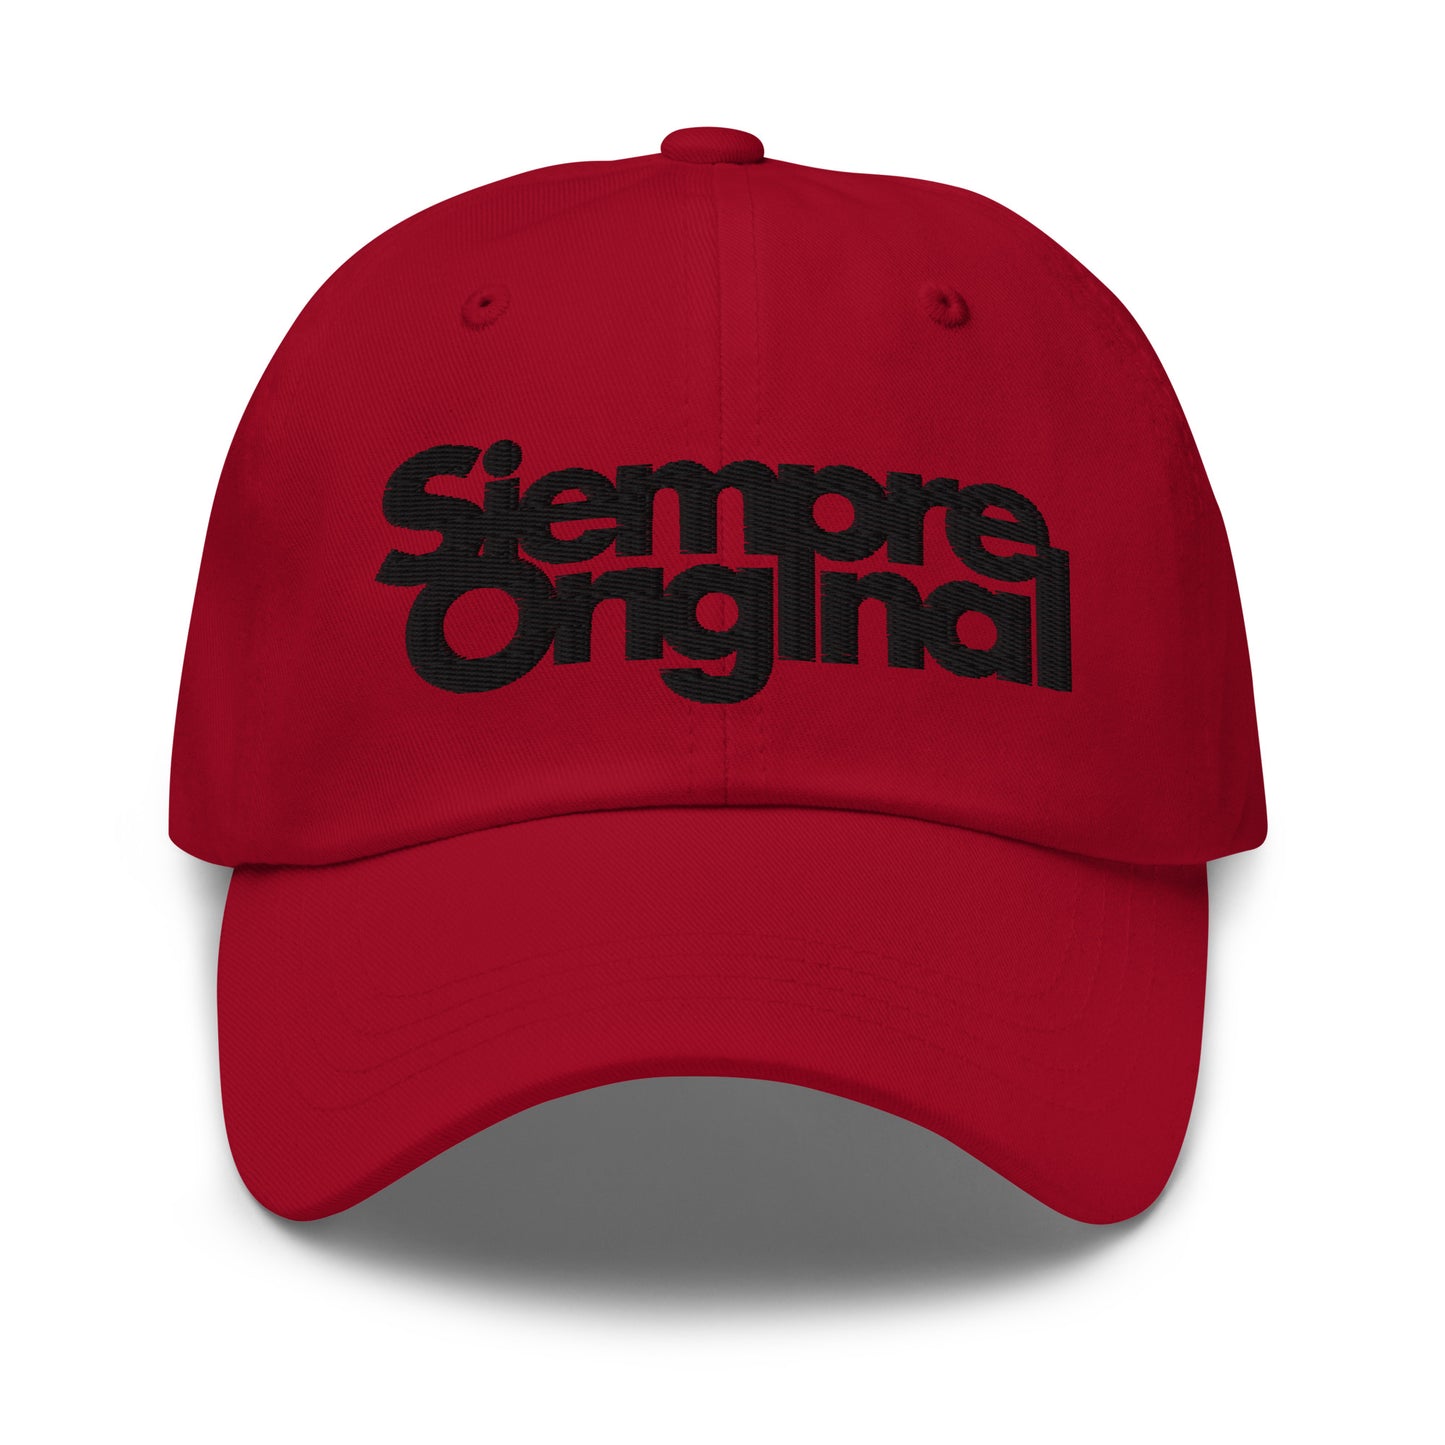 Gorra de Béisbol con logo Siempre Original bordado. Color Rojo Oscuro.